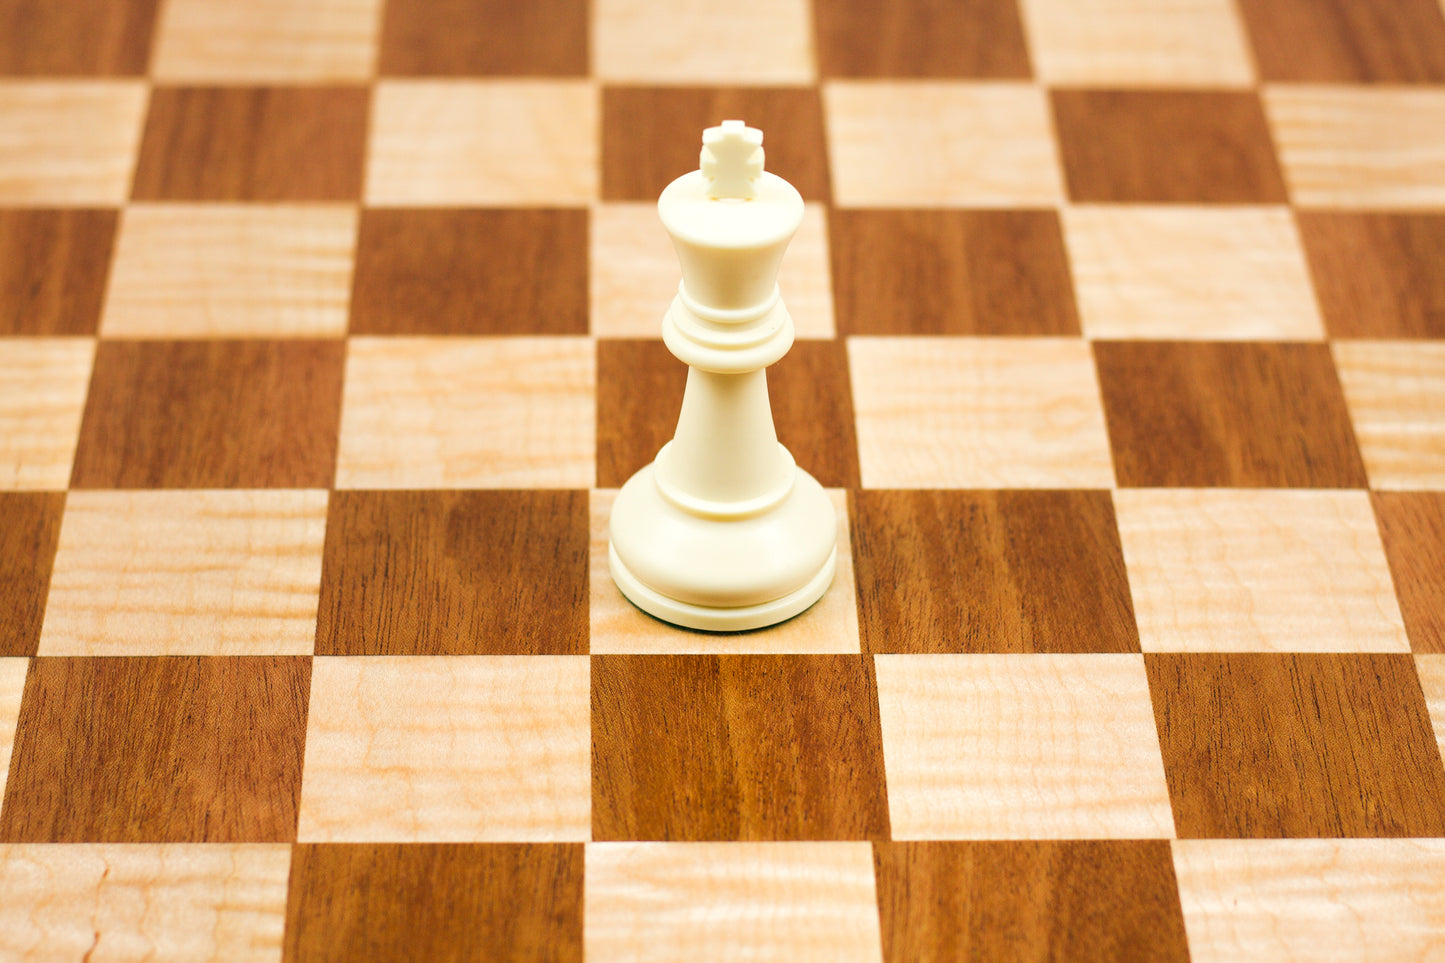 red-bottom chessboards